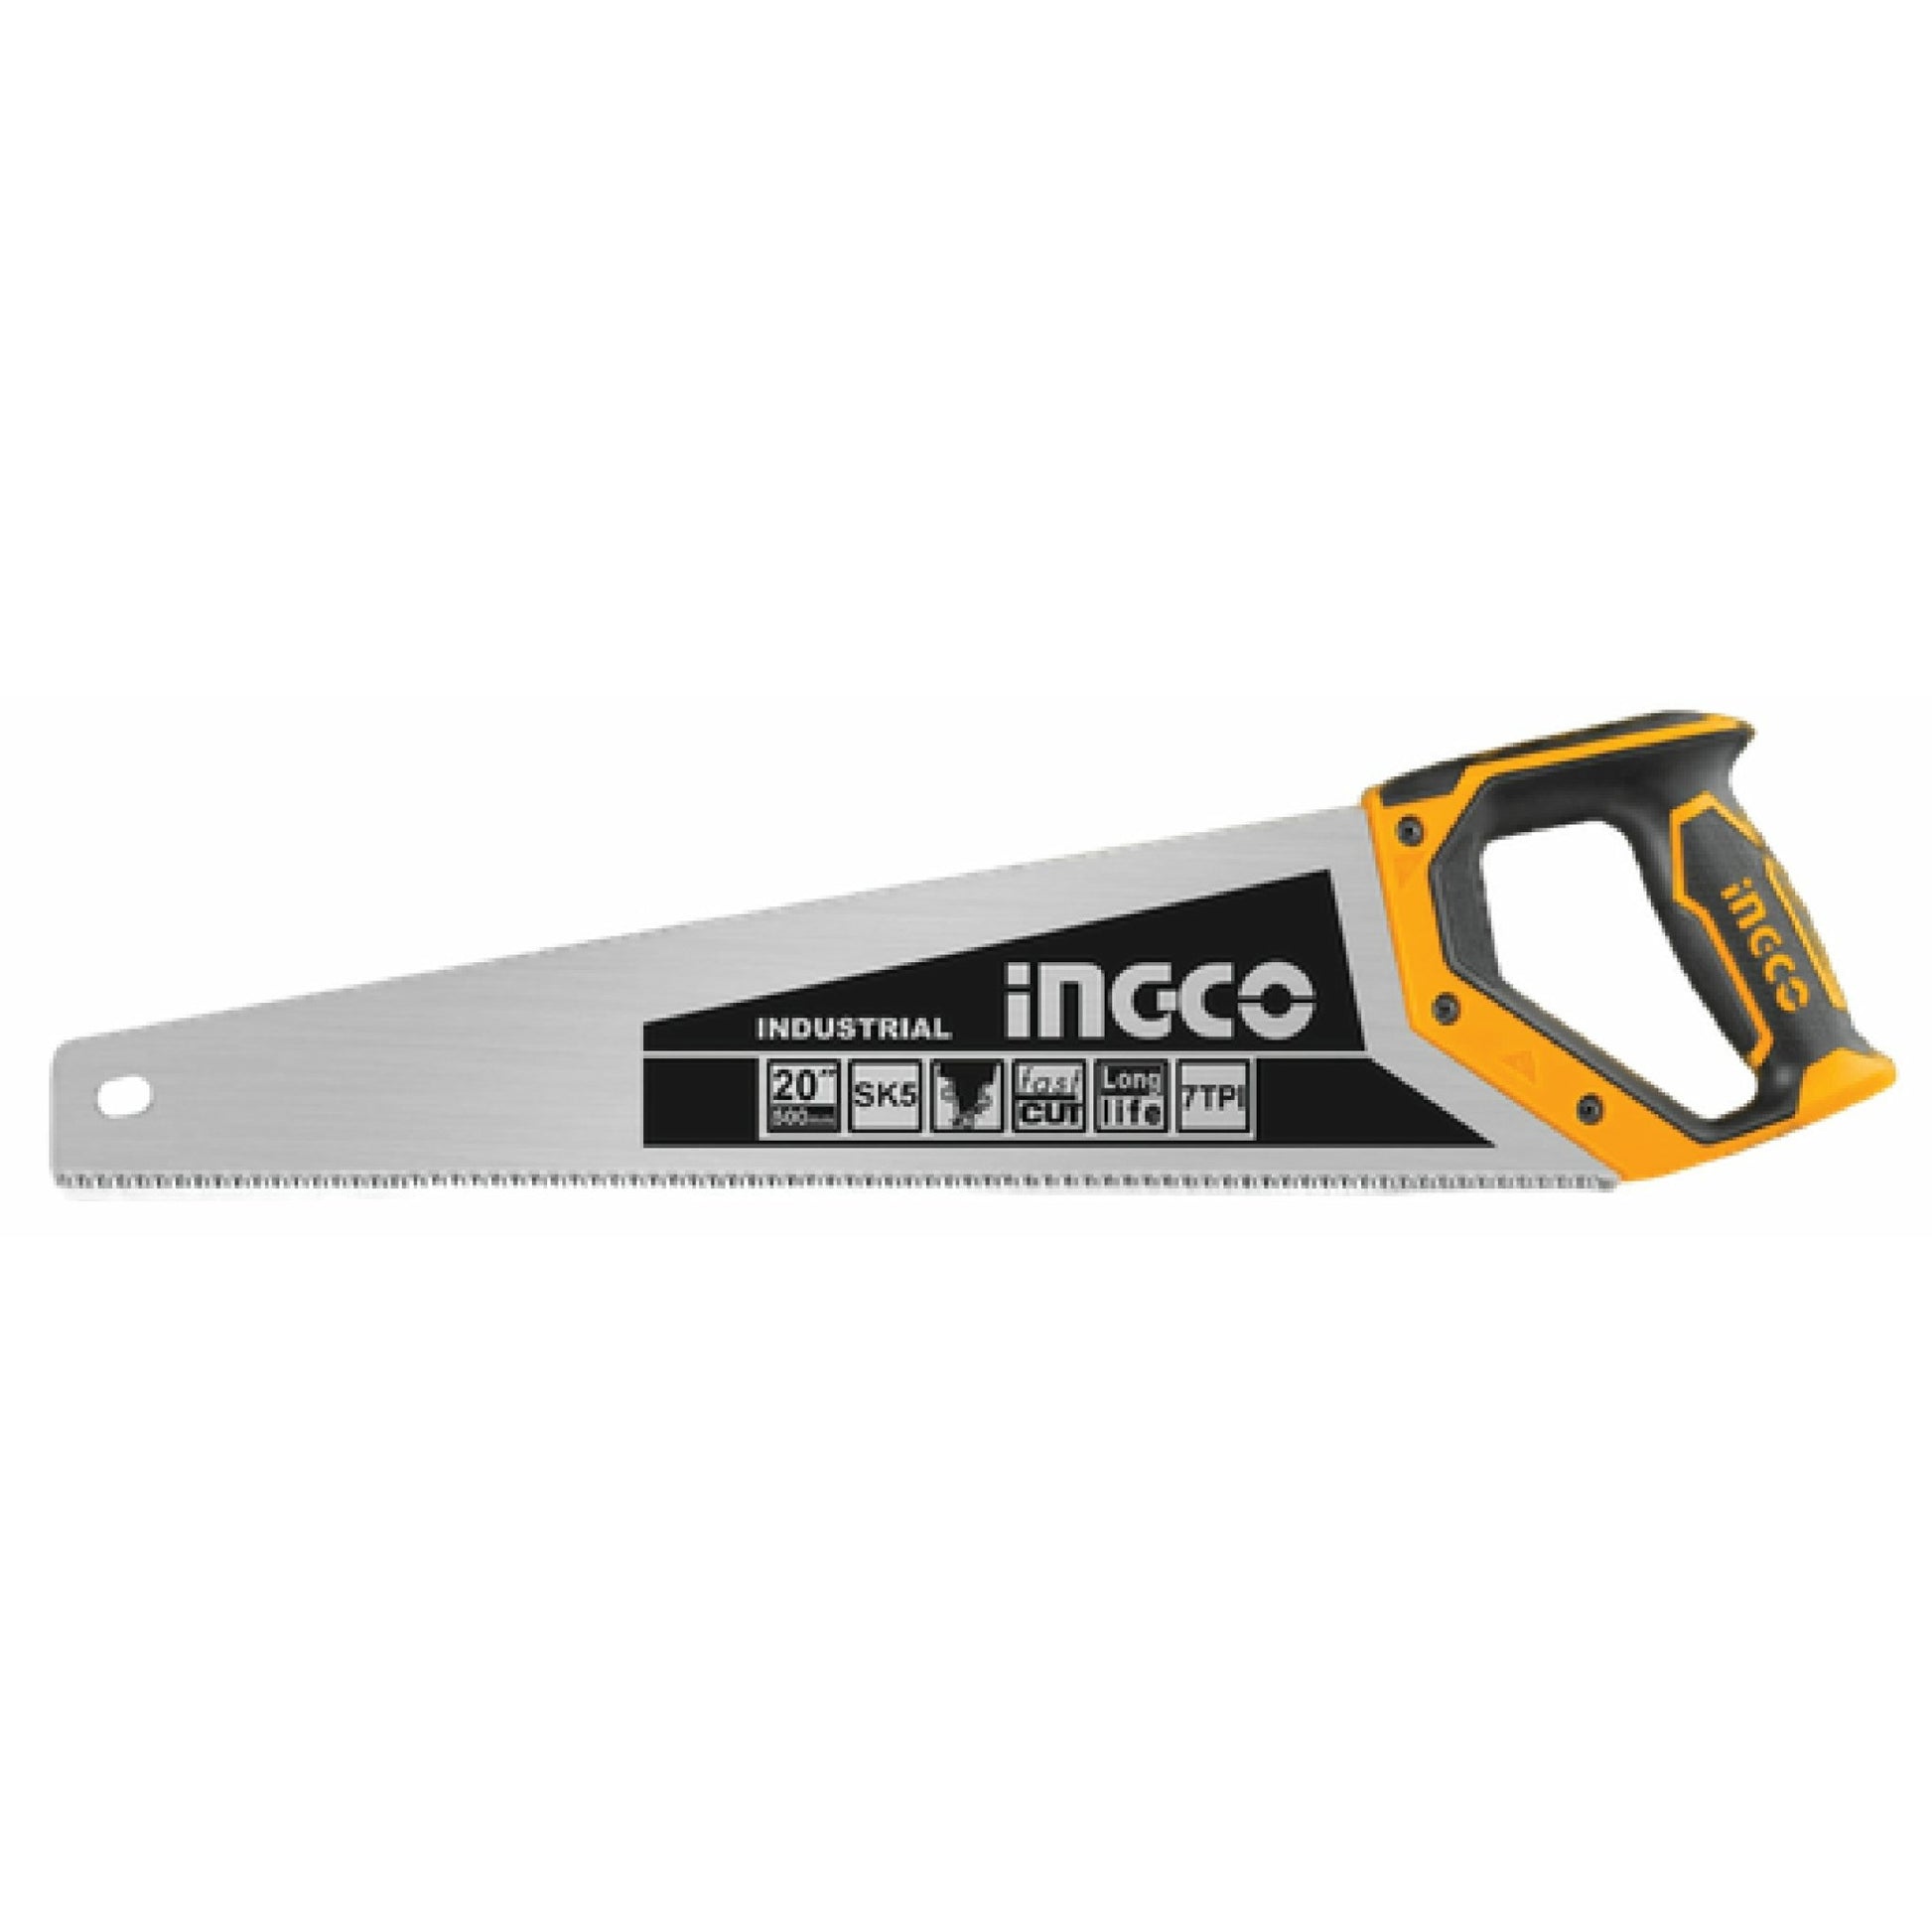 Ingco hand saws - Al's Hardware